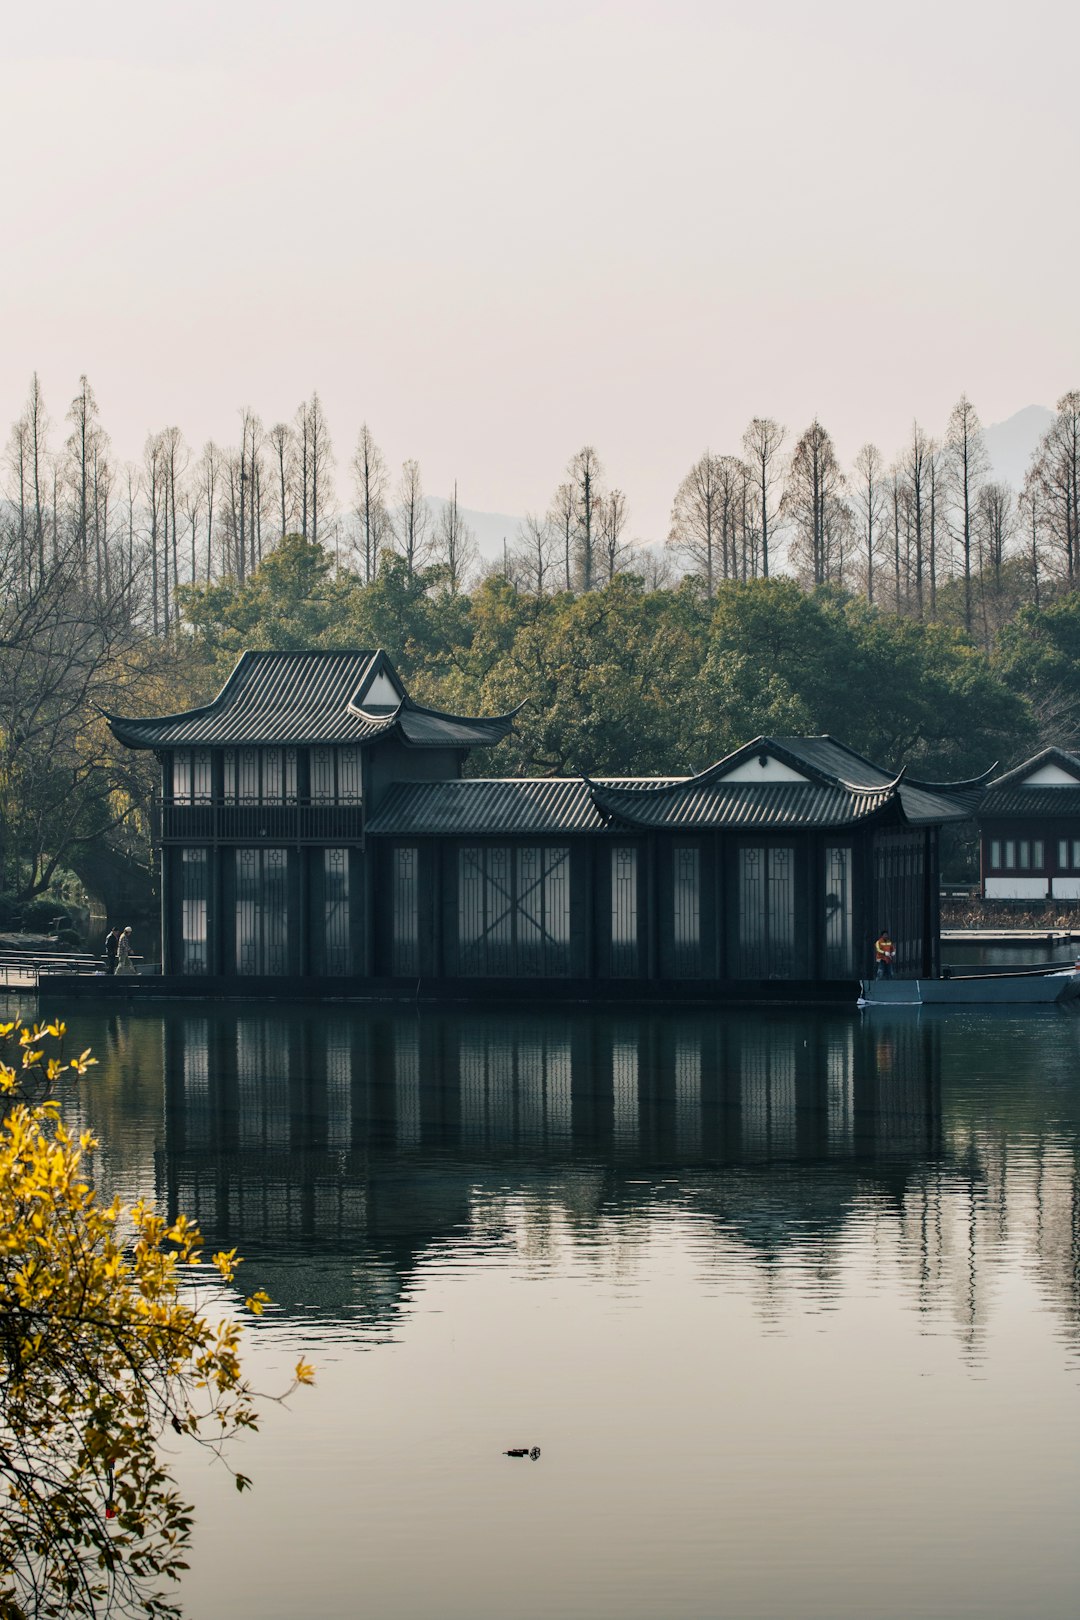 travelers stories about Waterway in Hangzhou, China